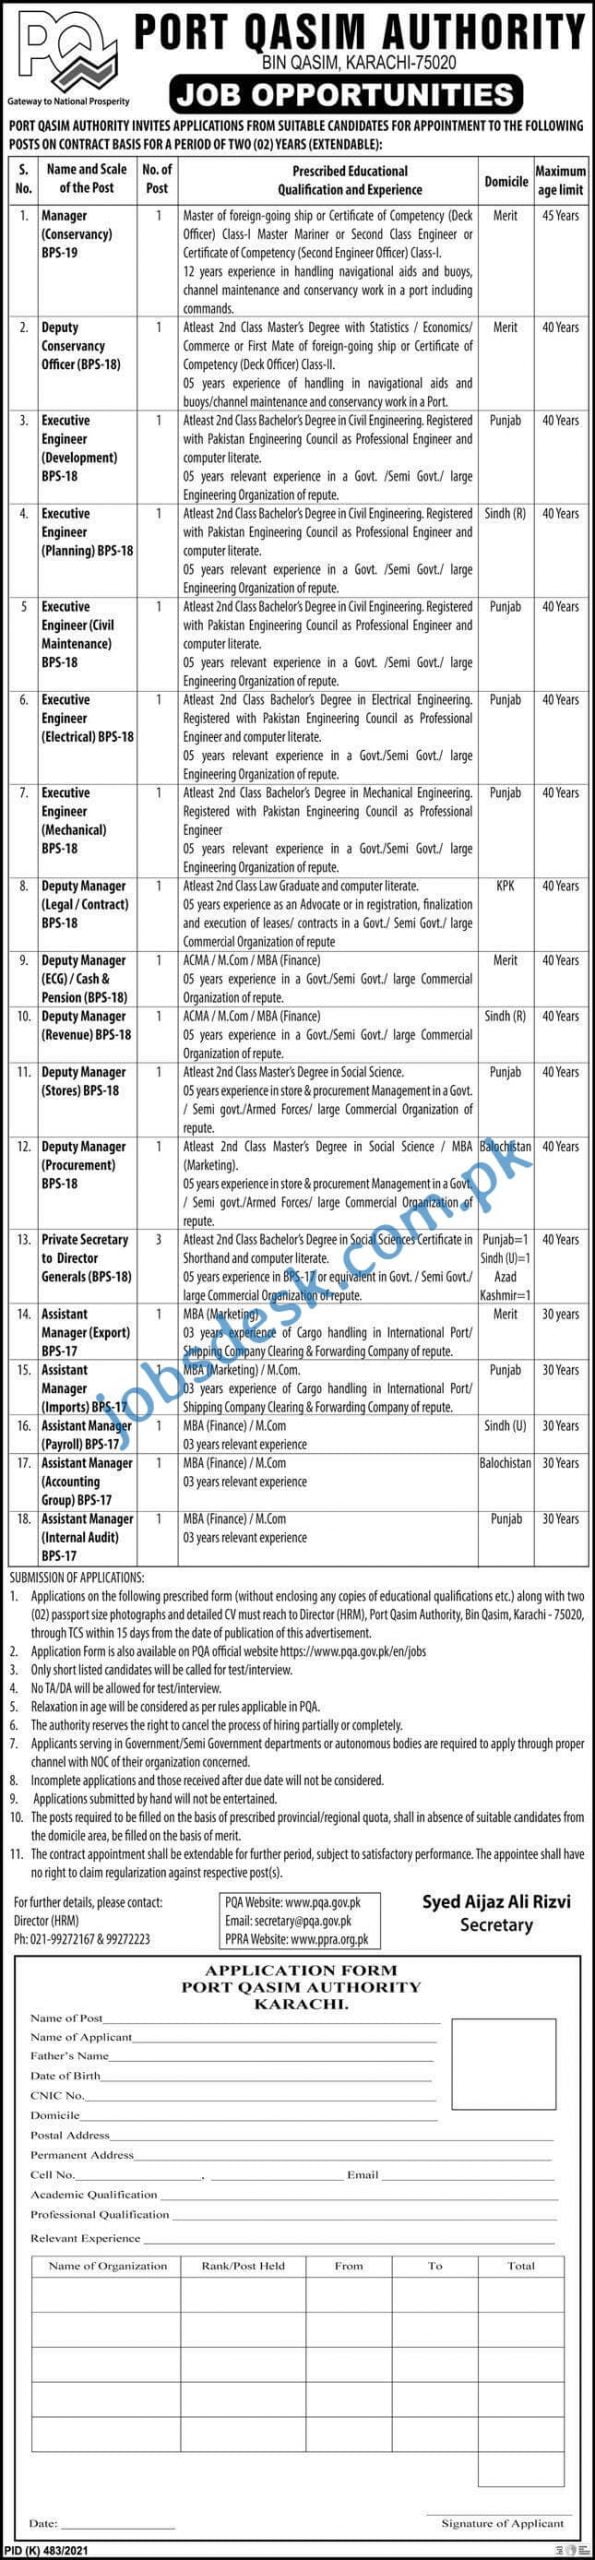 Port Qasim Authority Jobs in Karachi August 2021